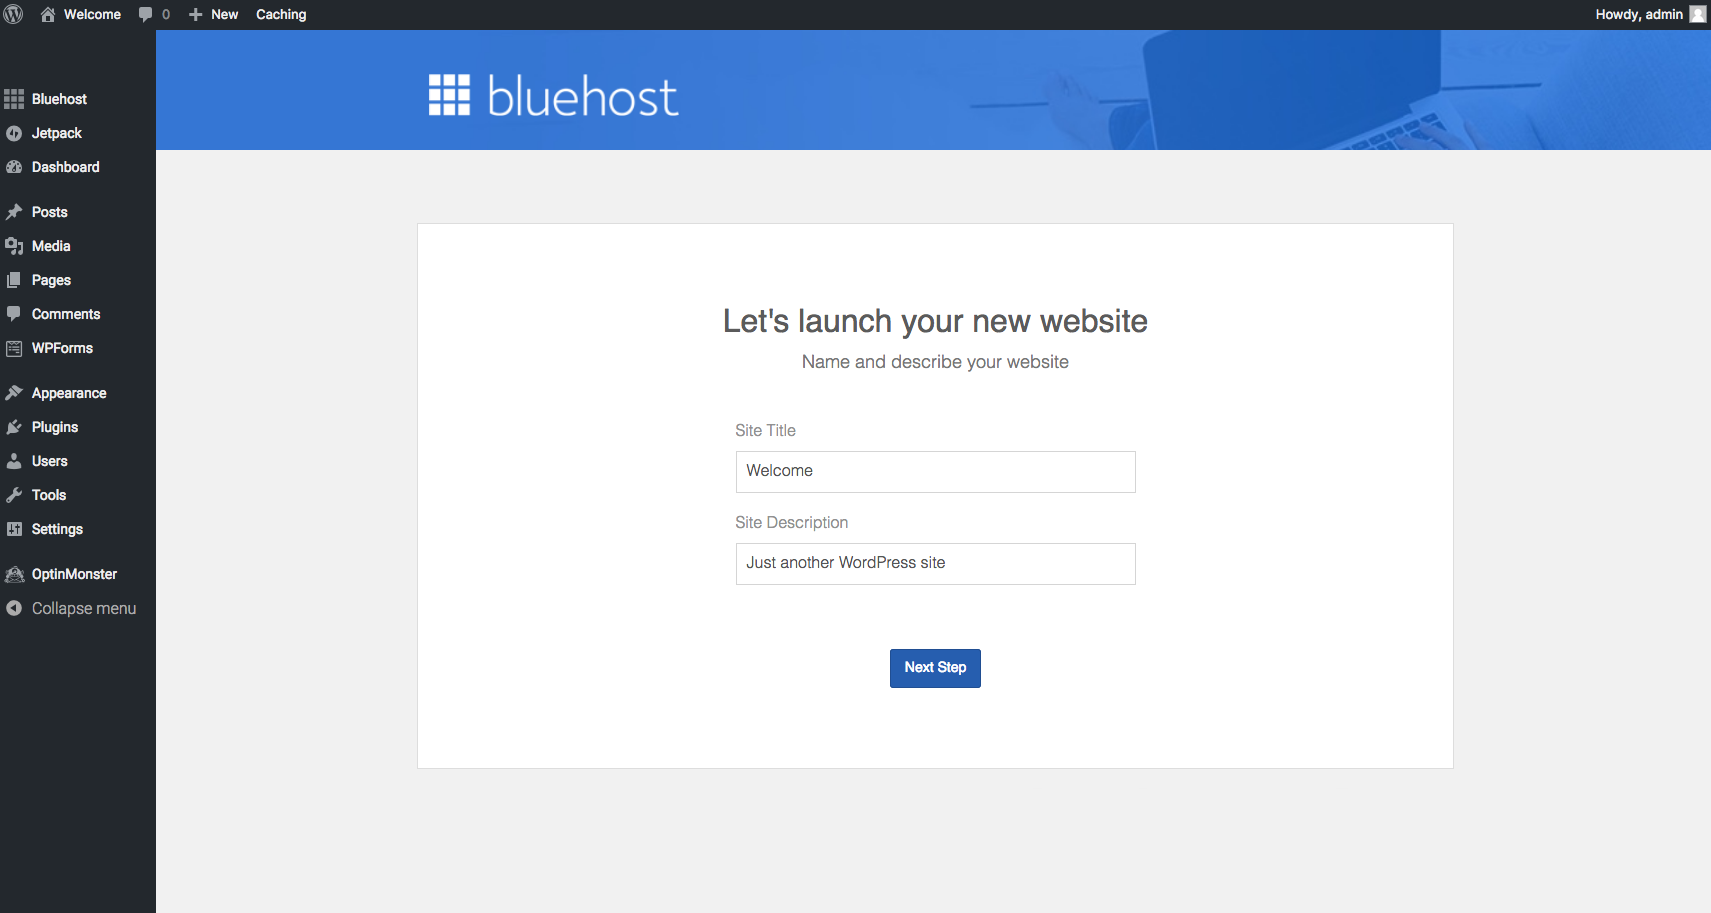 Let’s launch your new website